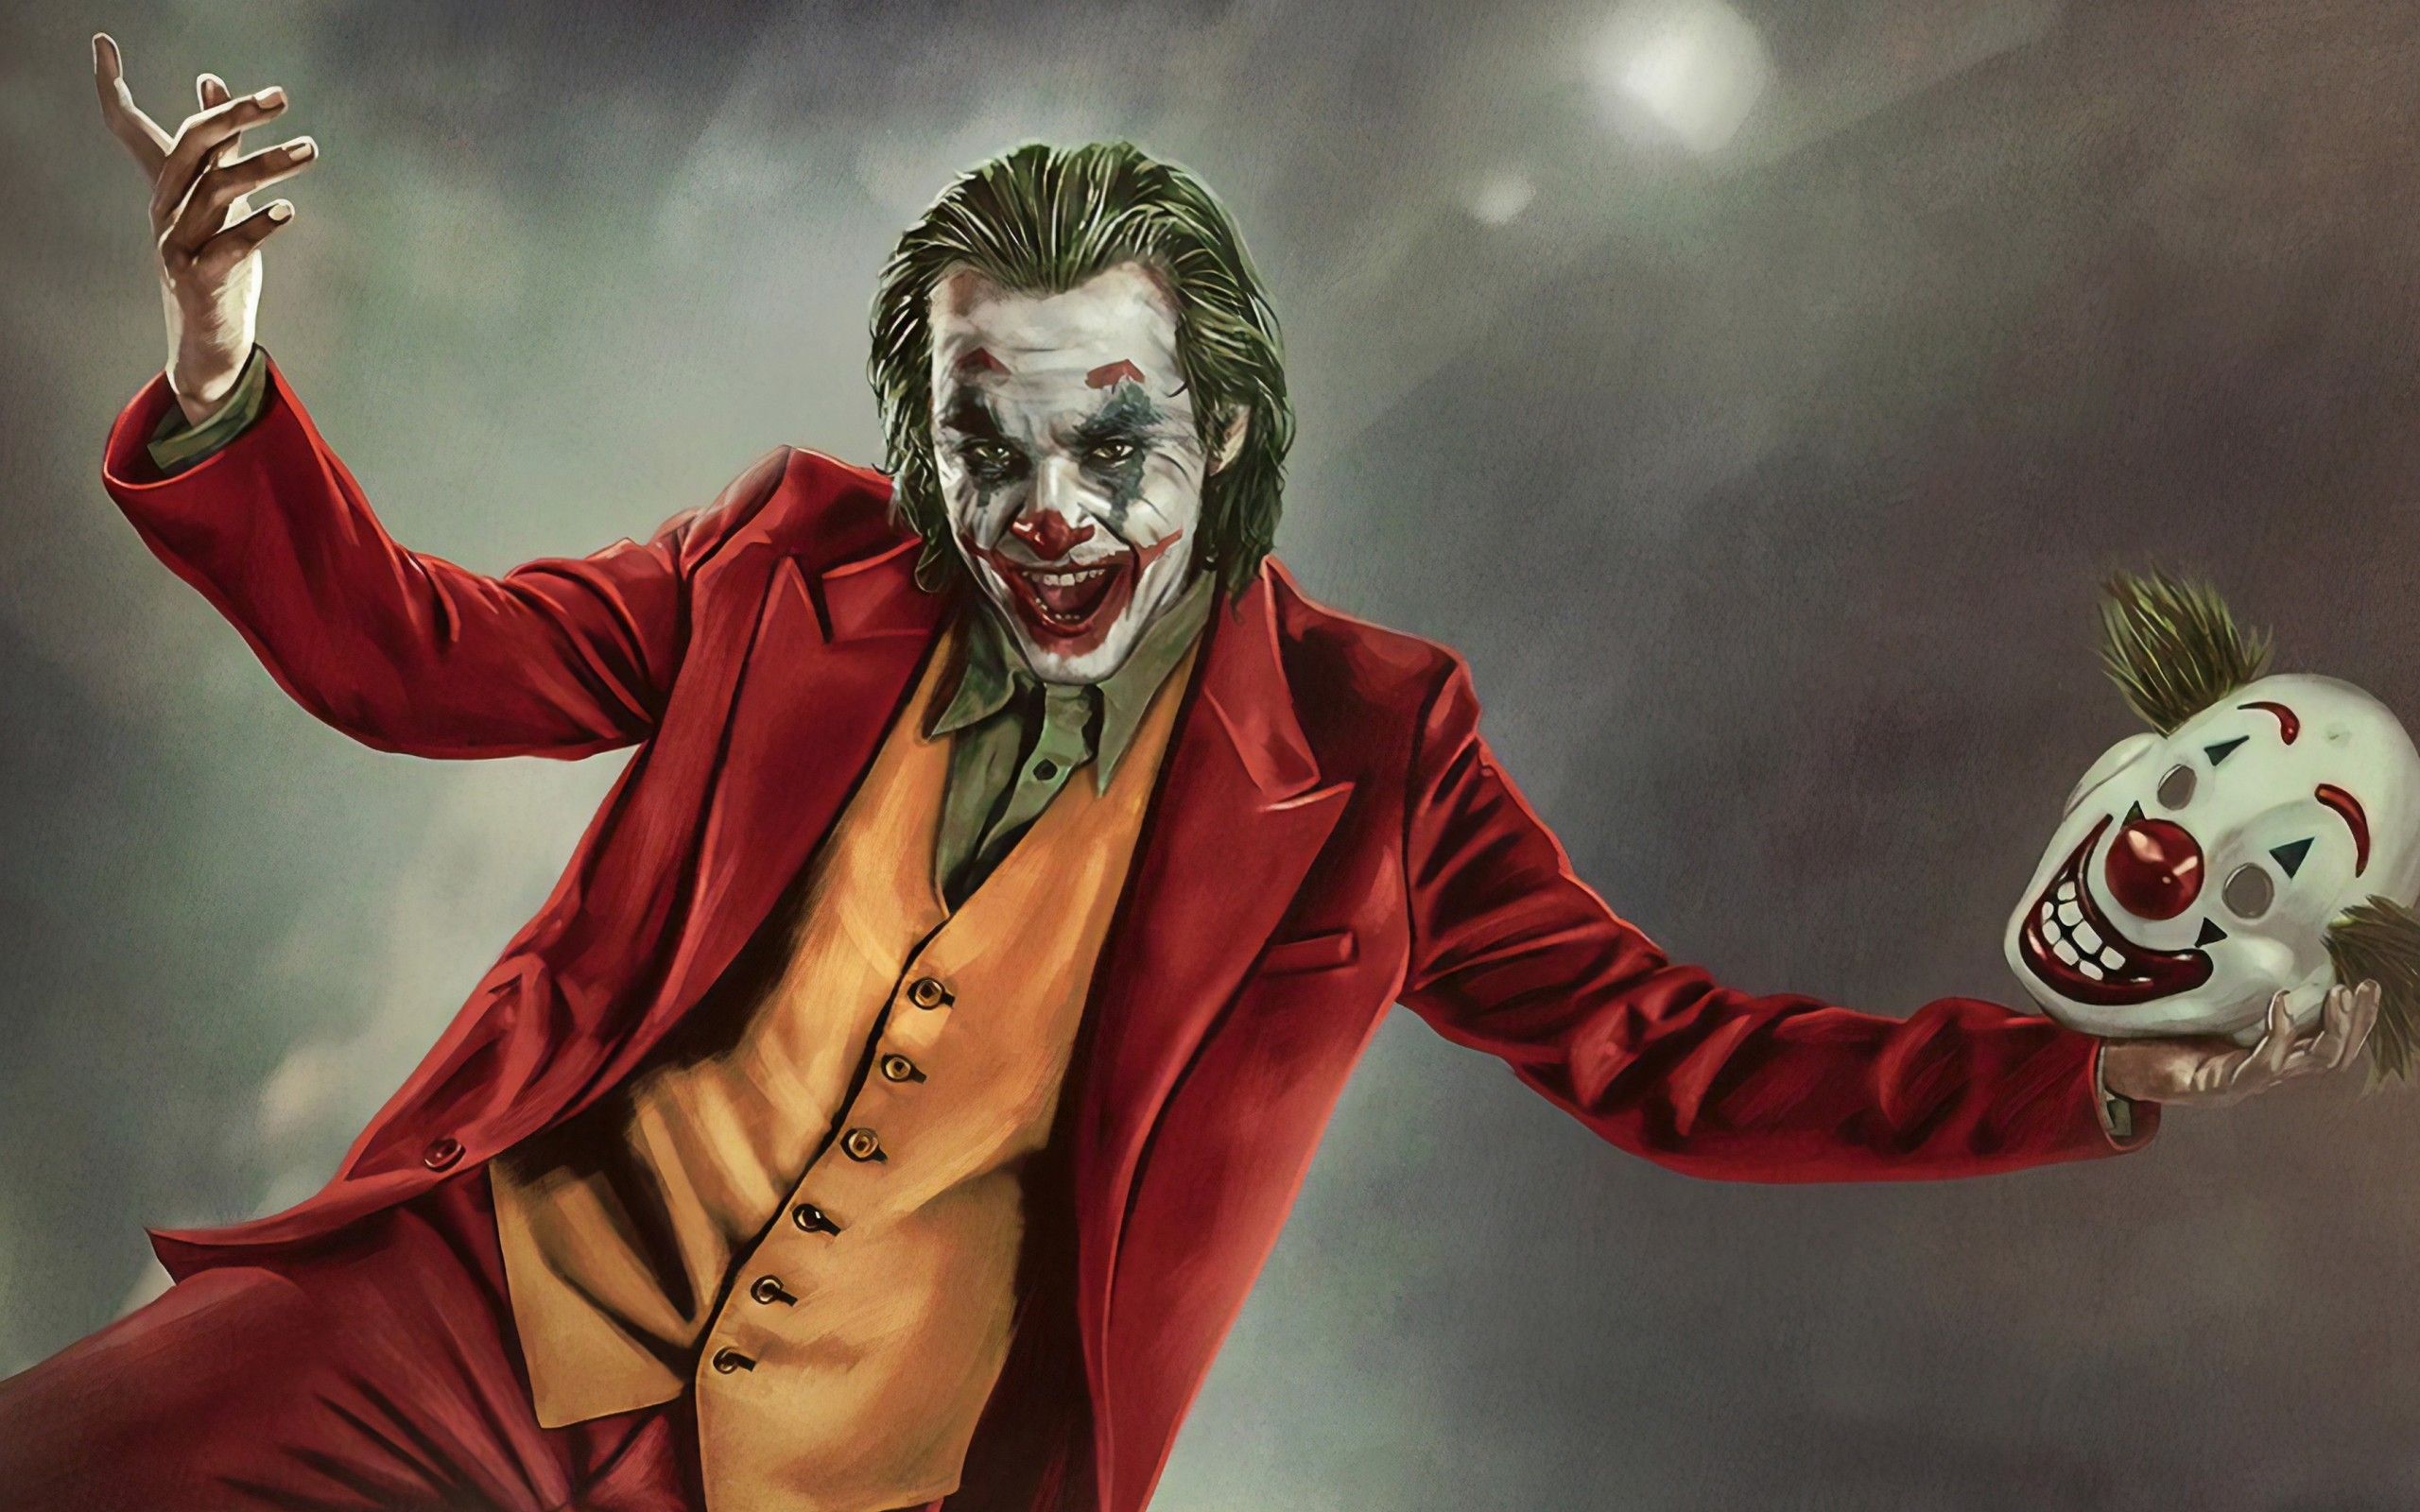 Download 2560x1600 Joker Artwork, Mask, Smiling Wallpaper